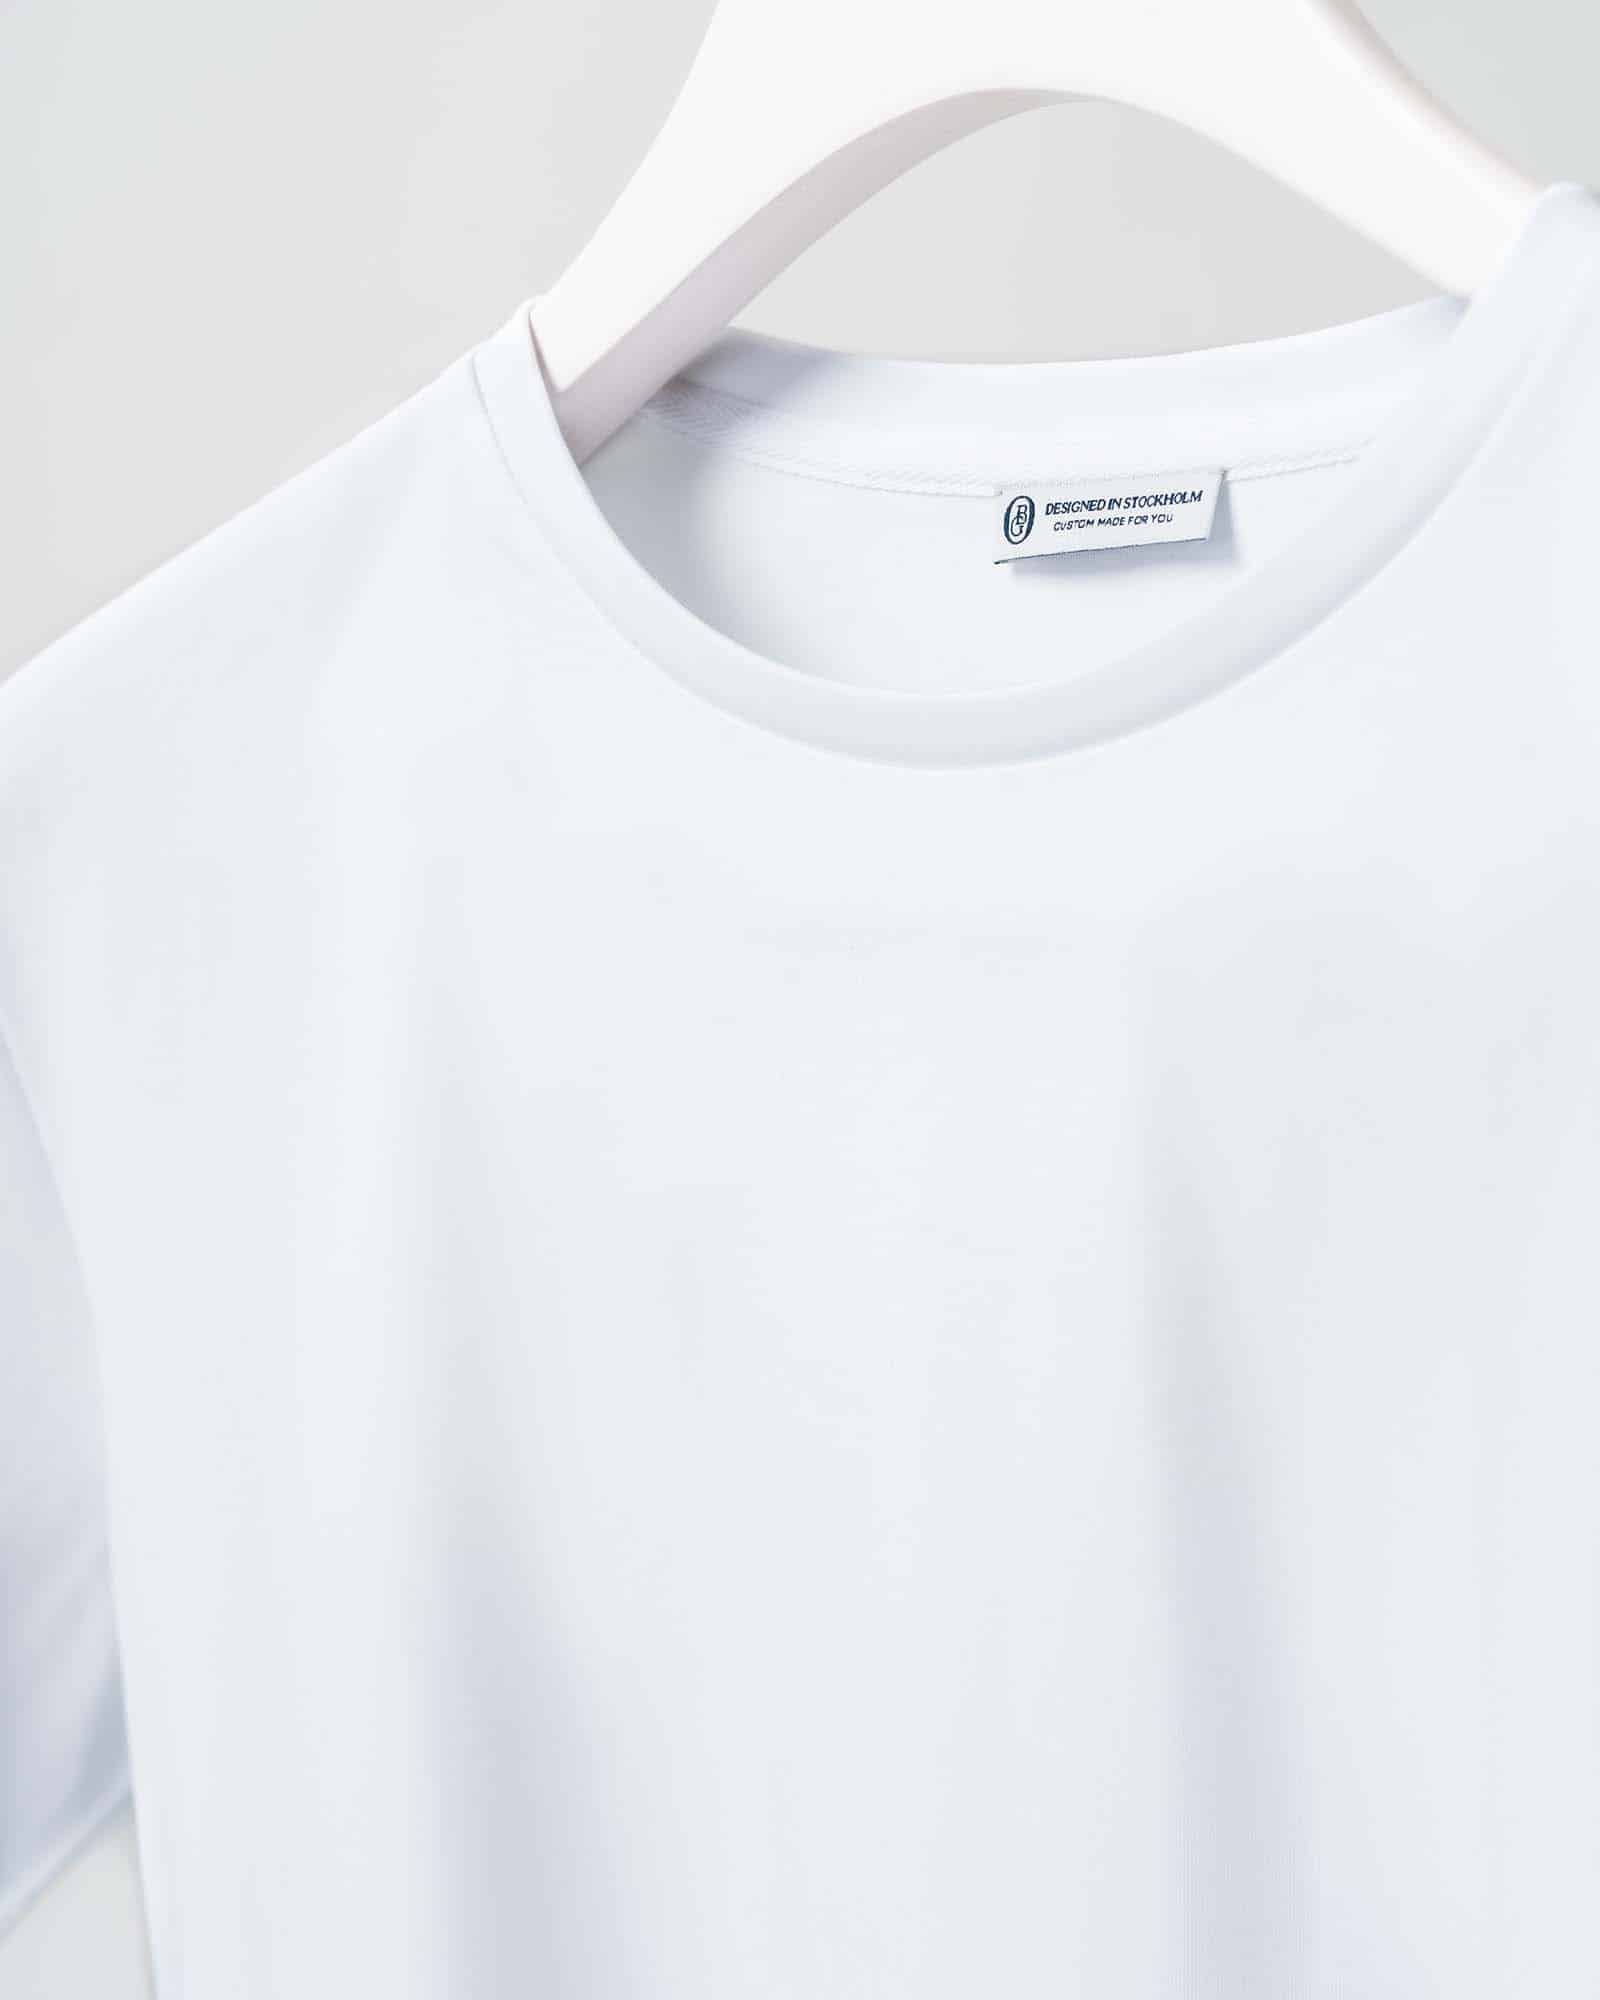 T-shirt supima cotton white image 4